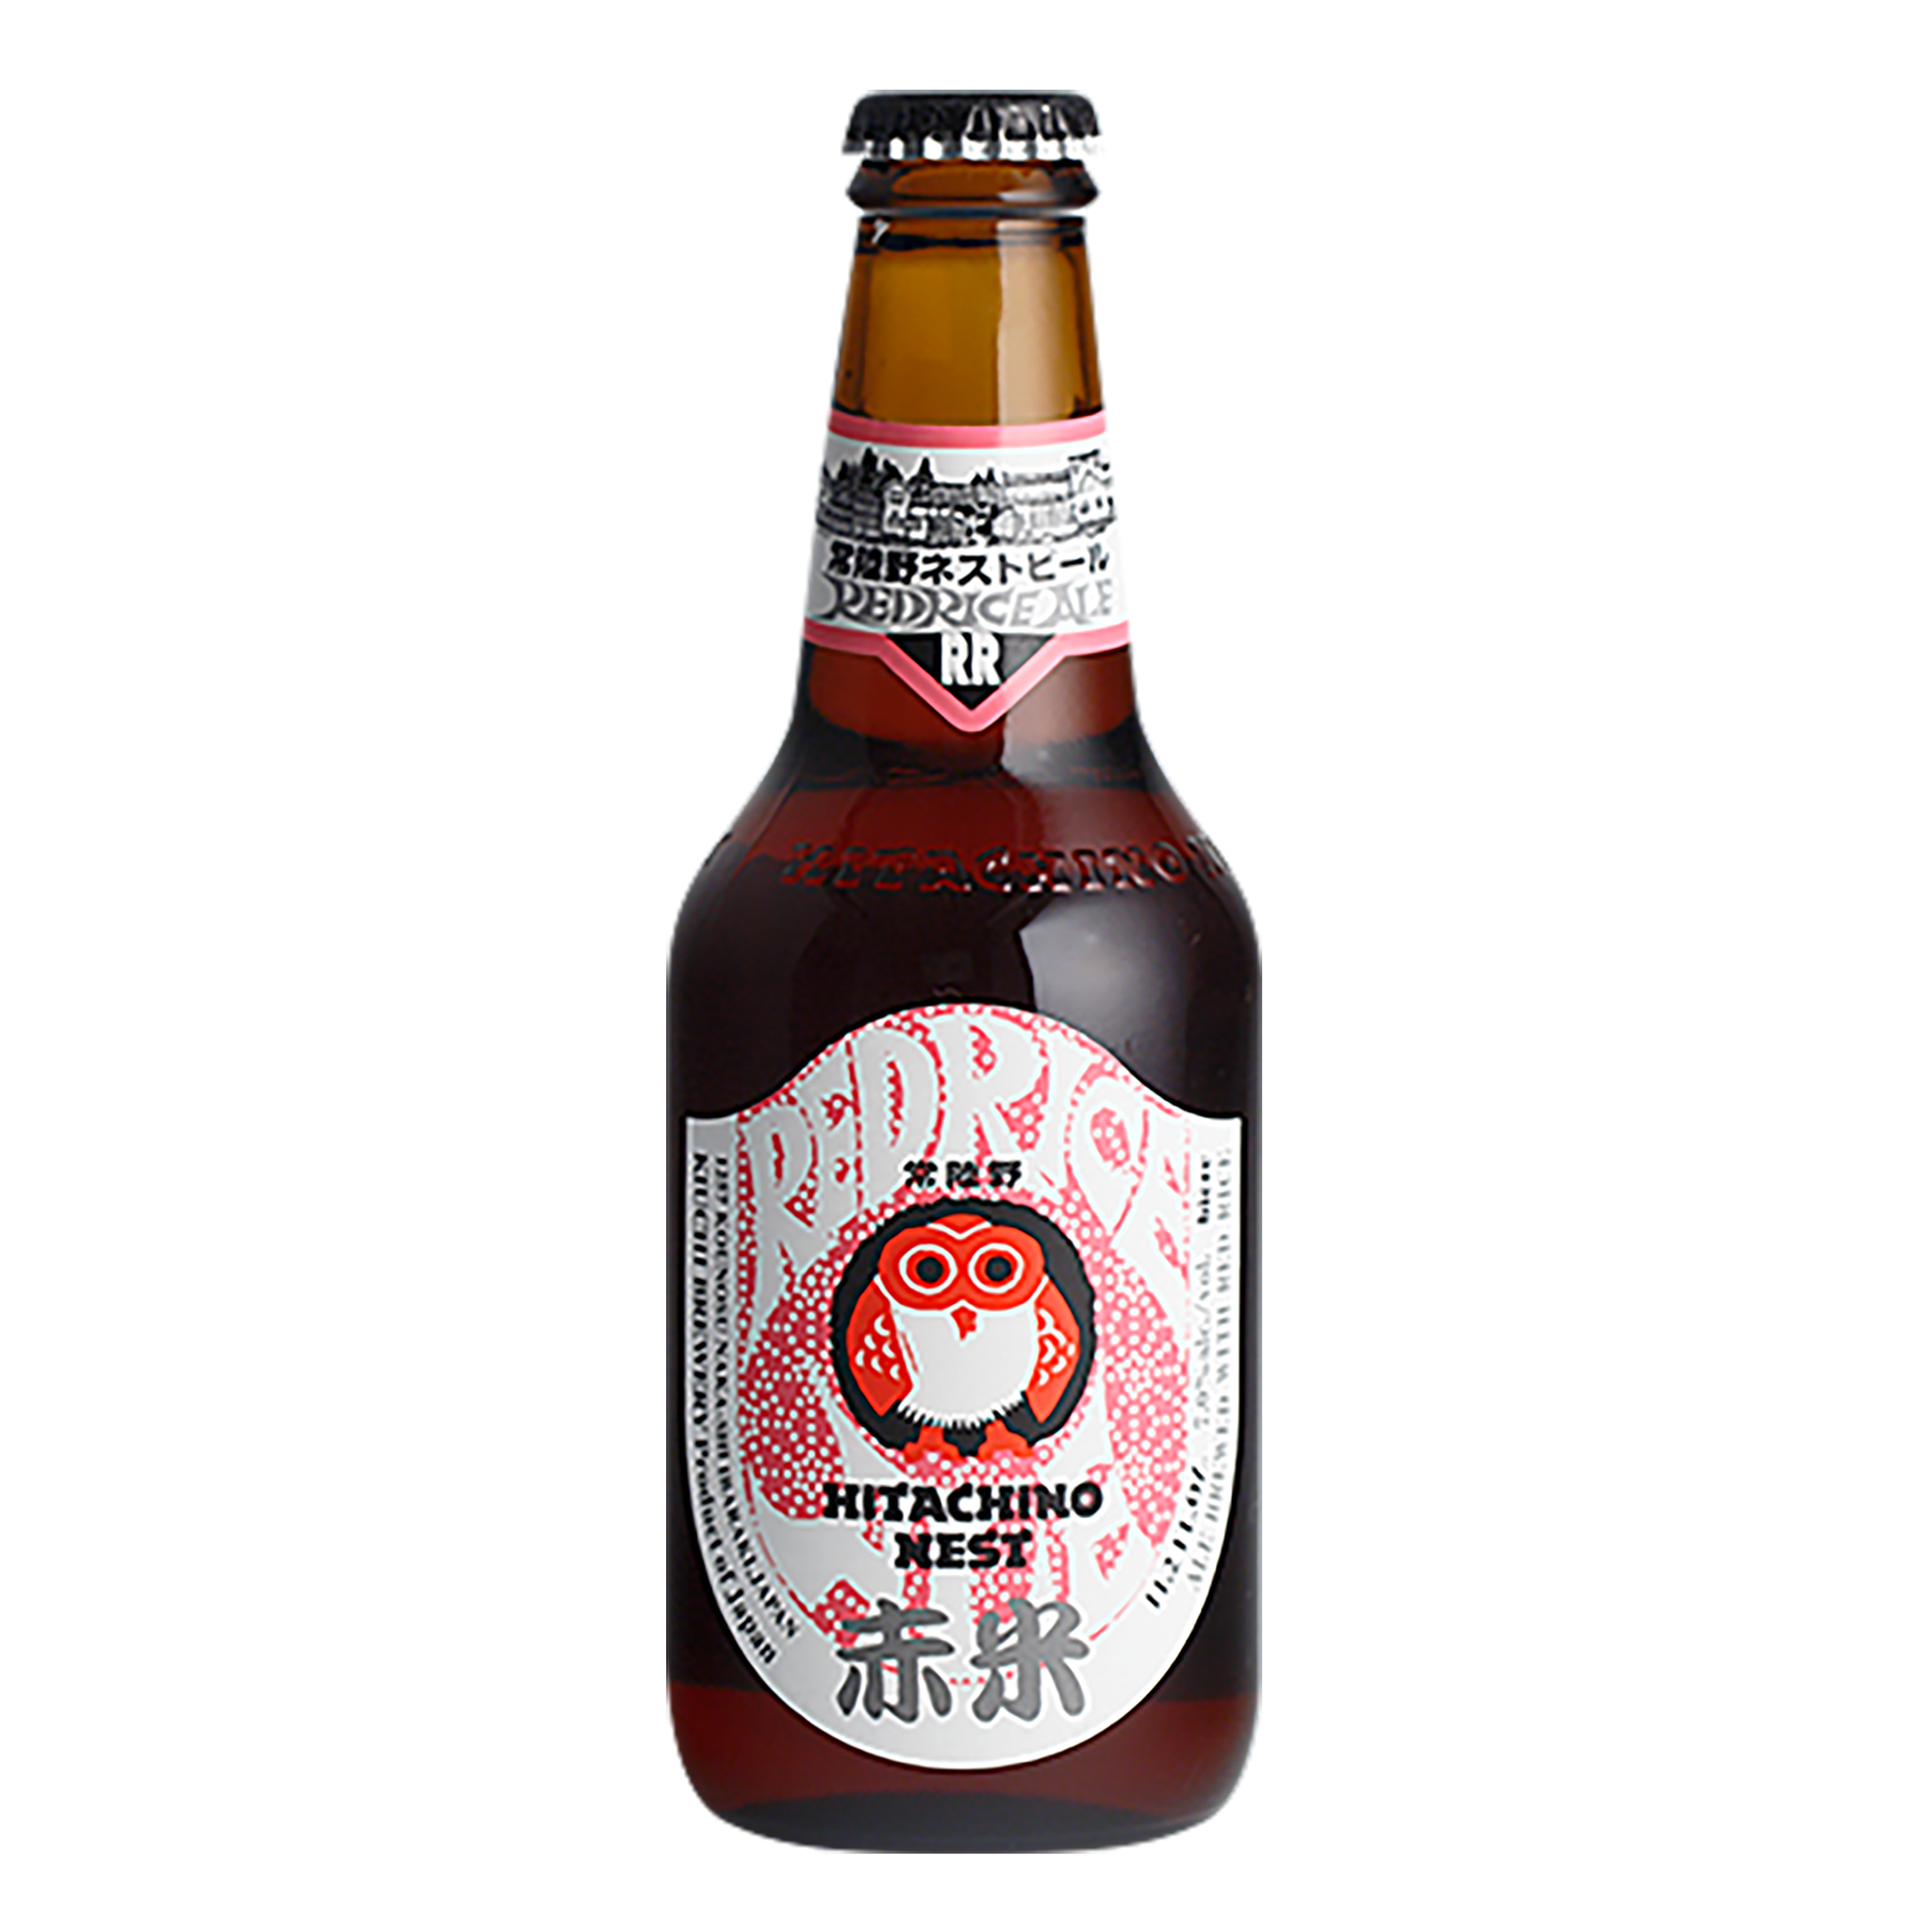 Hitachino Nest Red Rice Ale (Bottle) - Kent Street Cellars